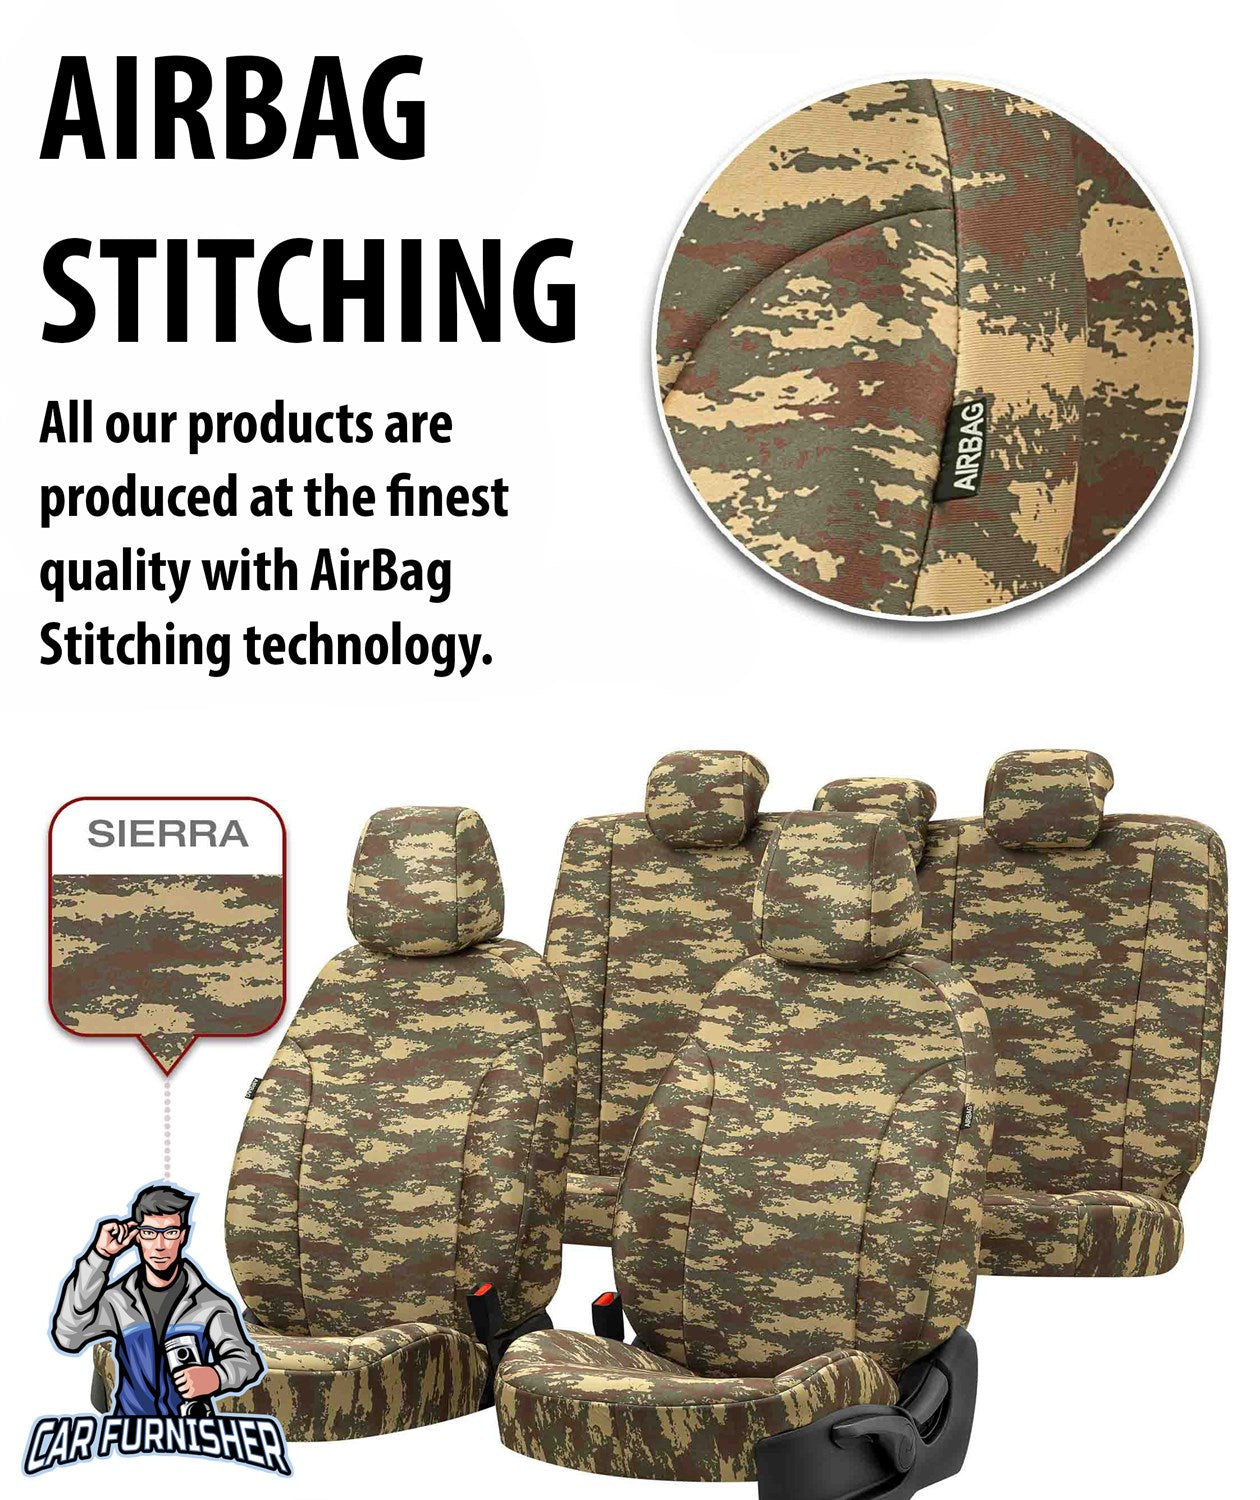 Man TGE Seat Covers Camouflage Waterproof Design Sahara Camo Waterproof Fabric